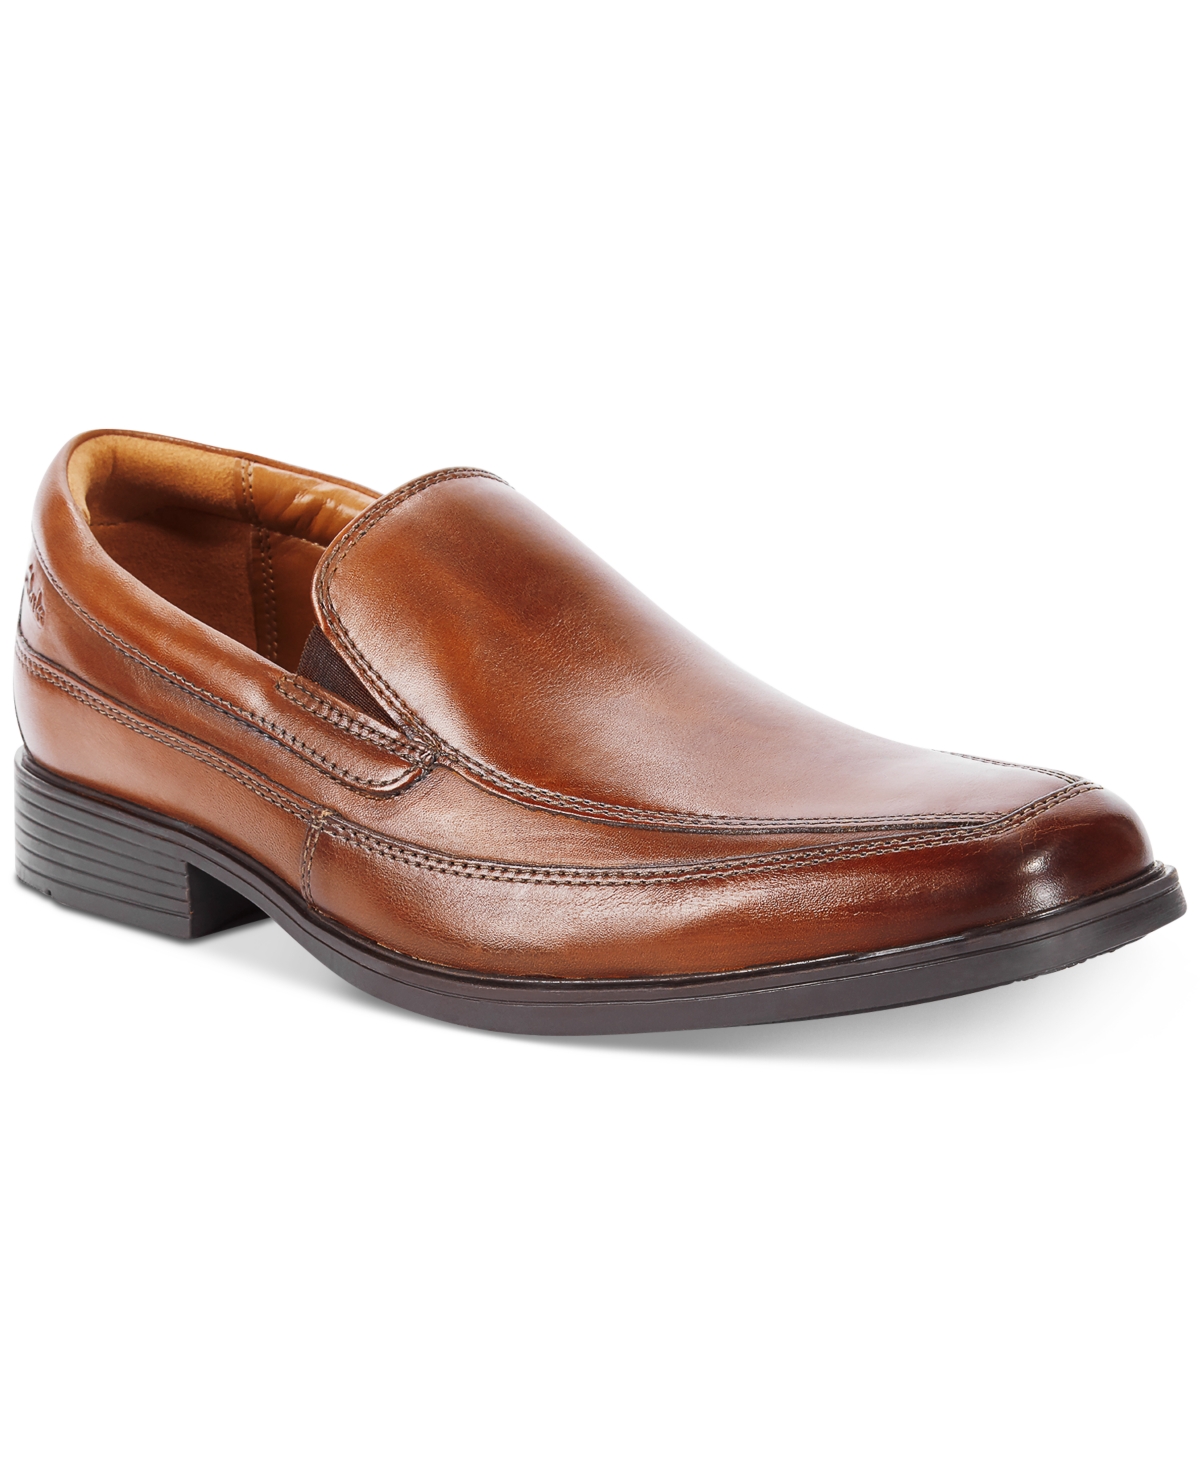 Men's Tilden Free Loafer - Dark Tan Leather